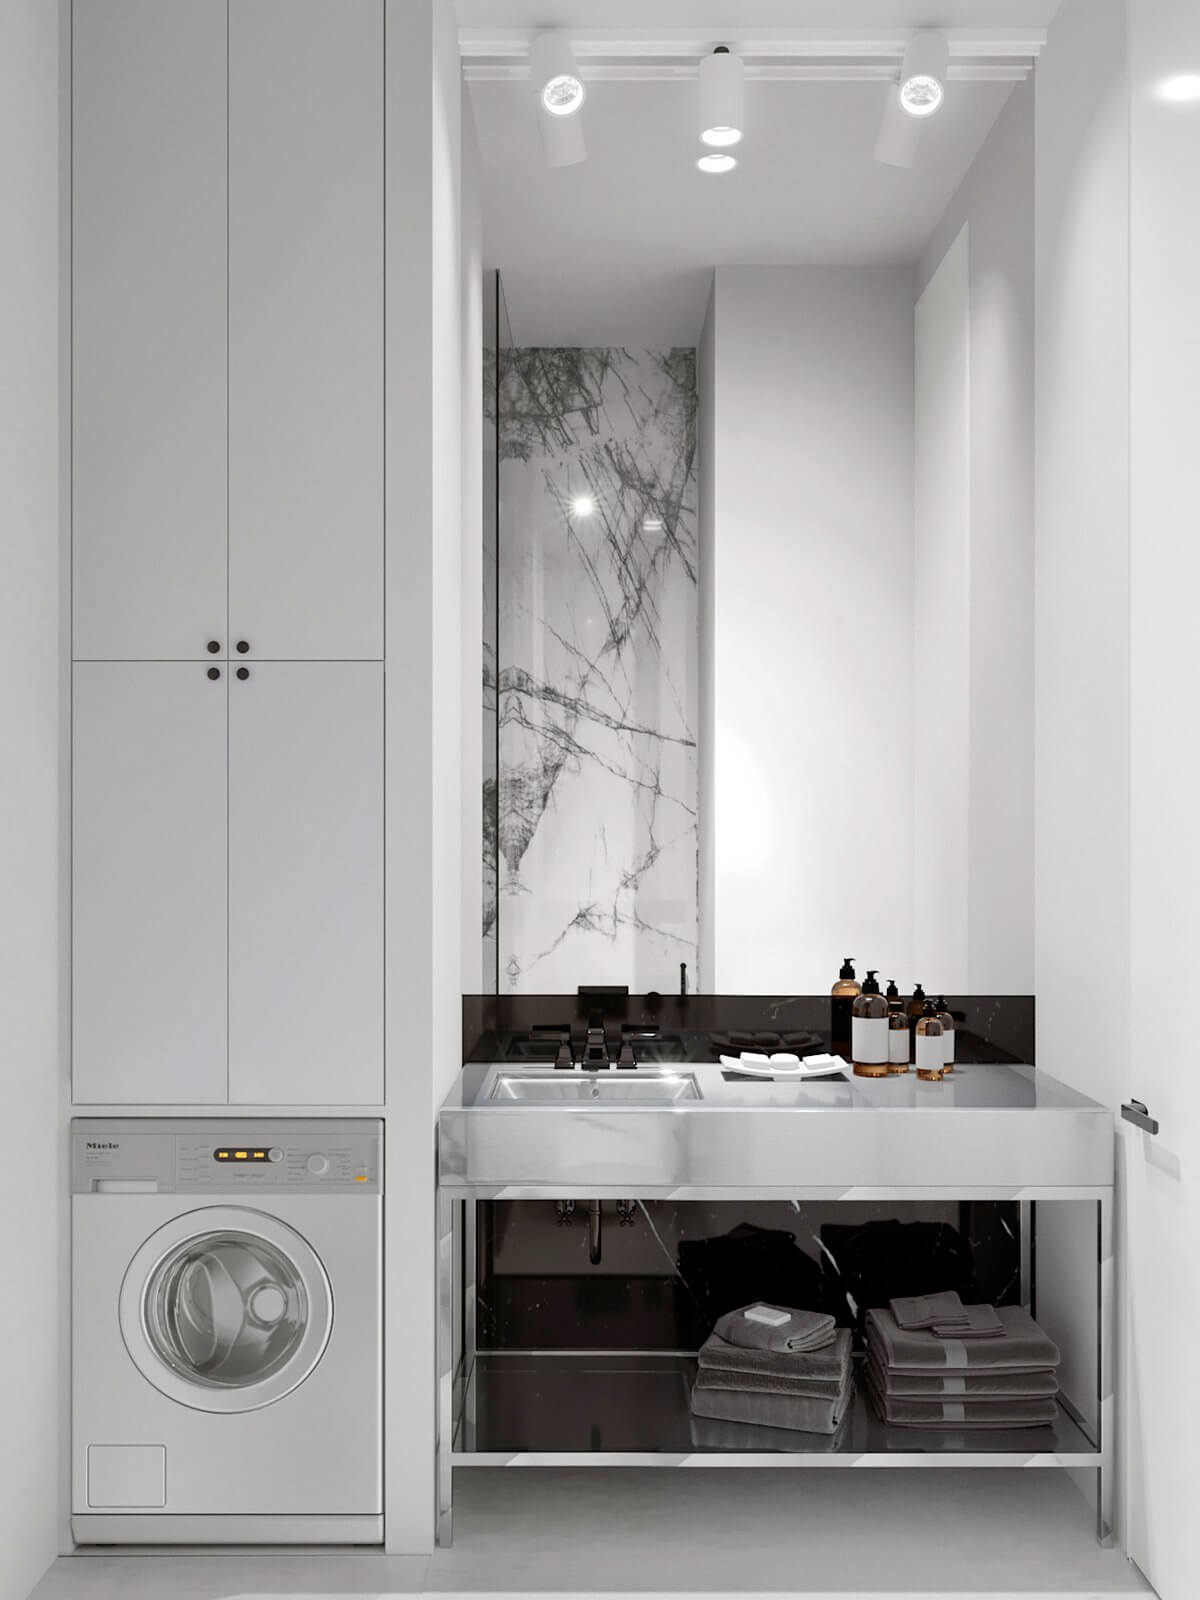 Apartment in Kiev bathroom wash basin stainless steel - cgi visualization